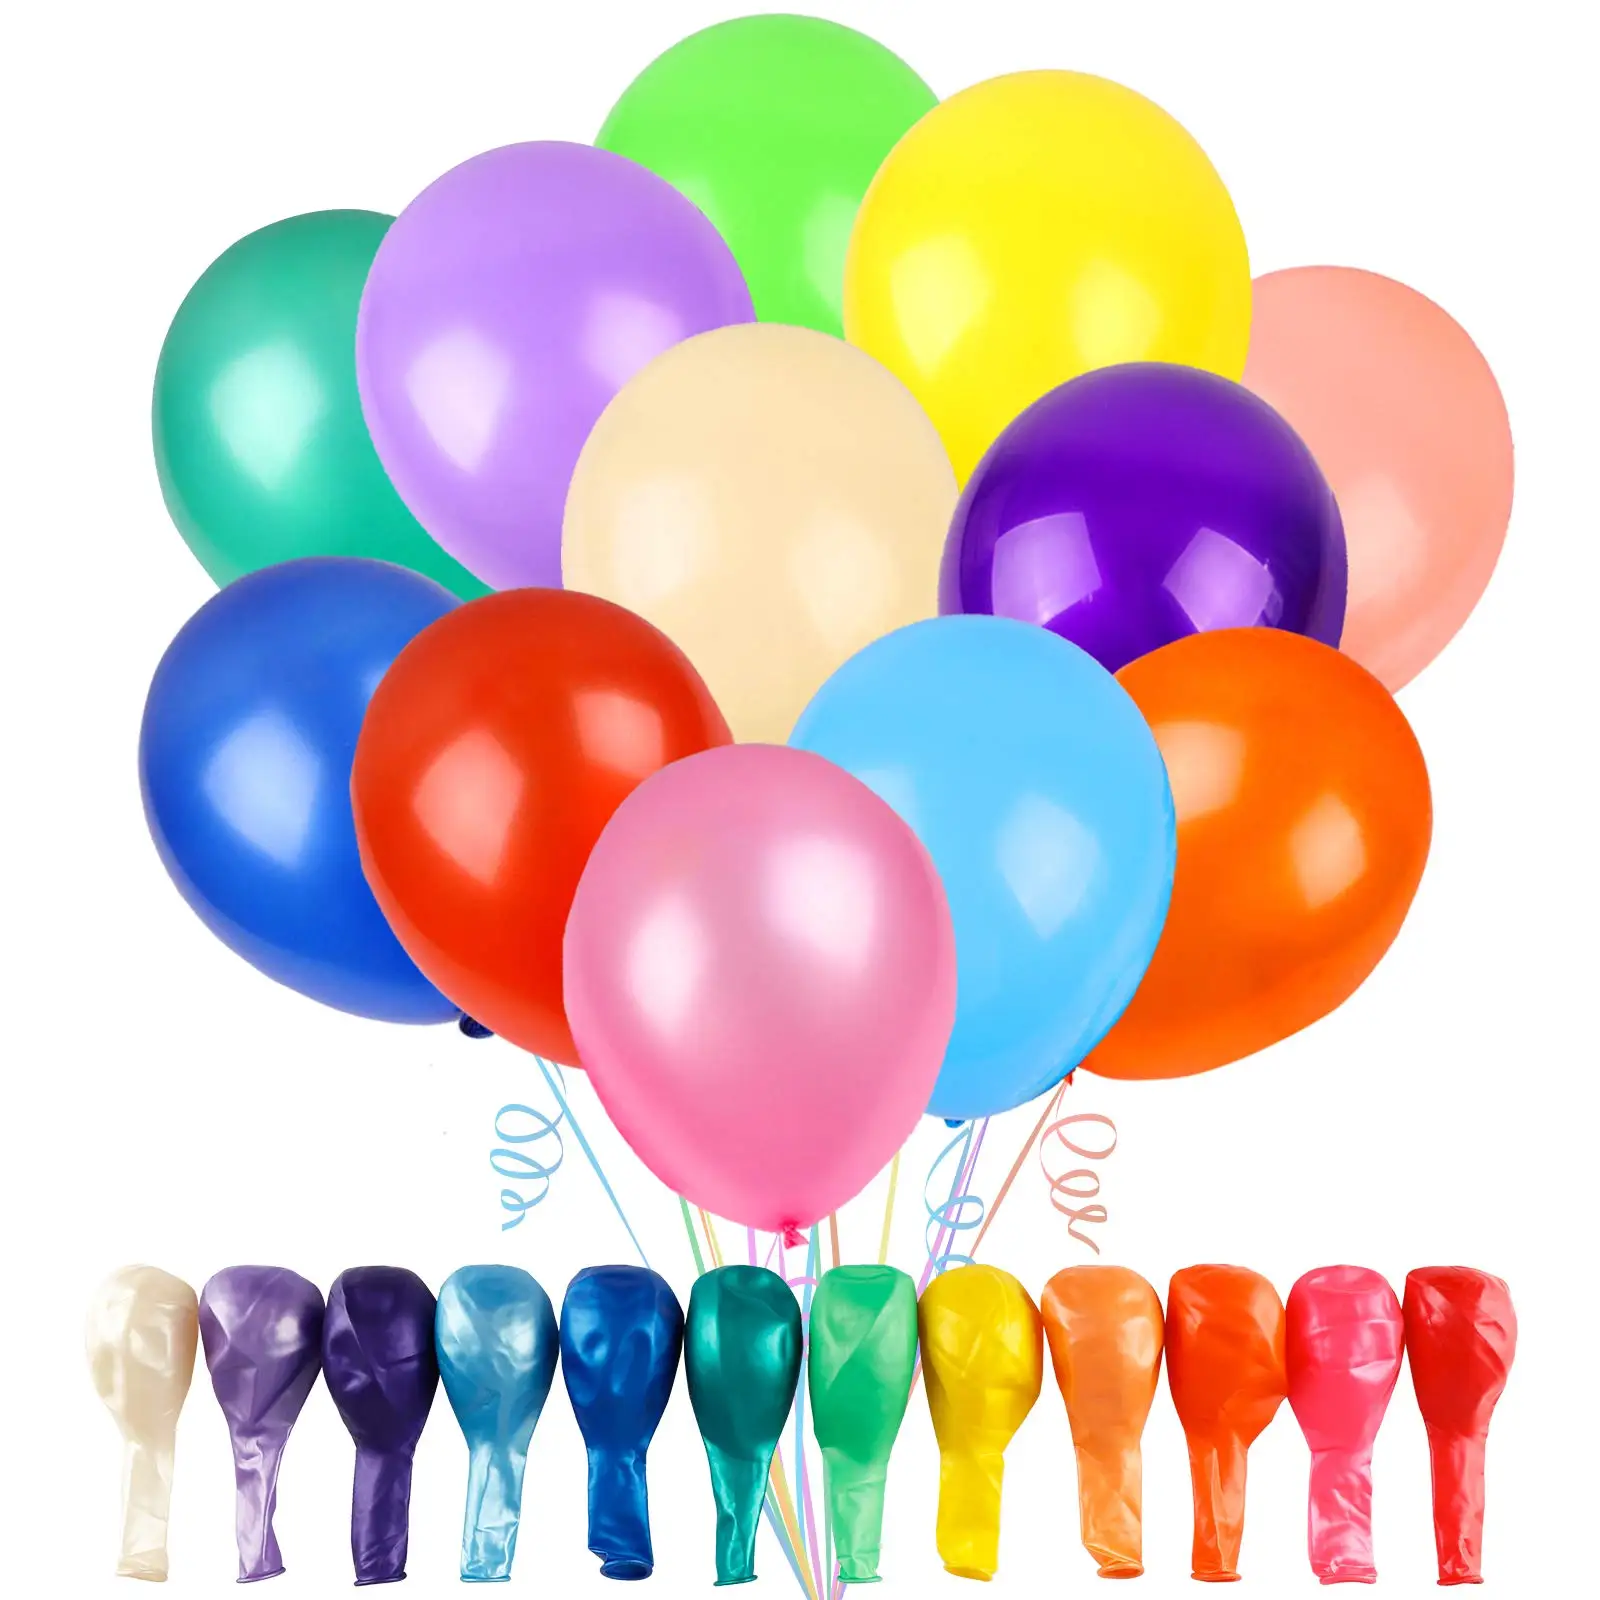 Balloons Vector Illustration Printable Art Bunch Of